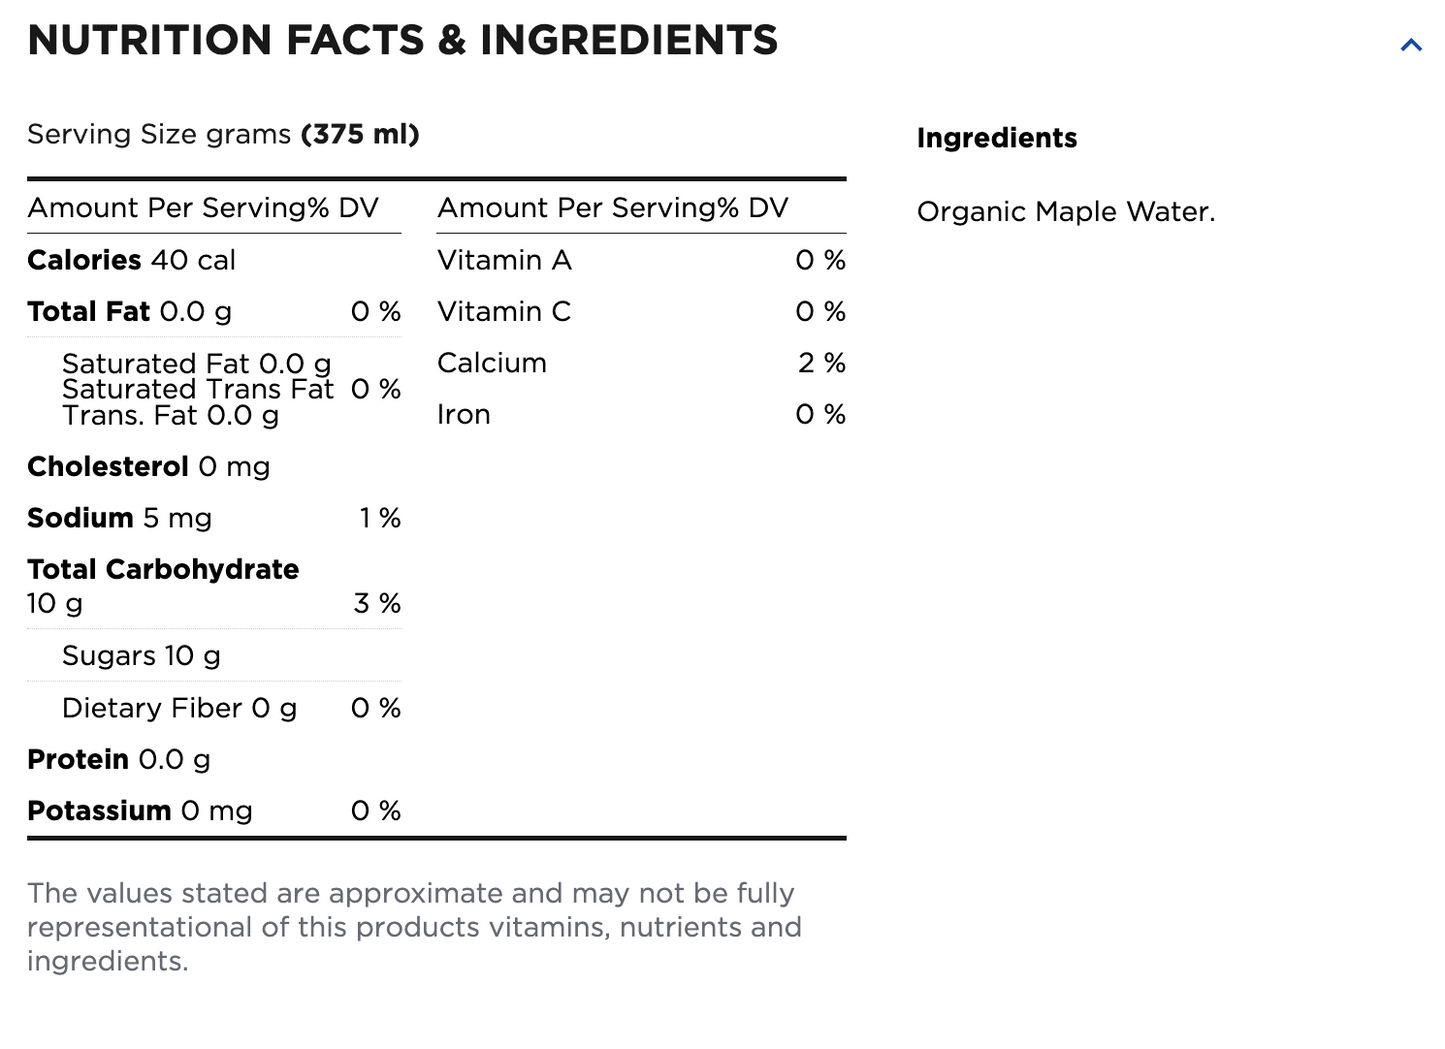 Organic 100% Maple Water